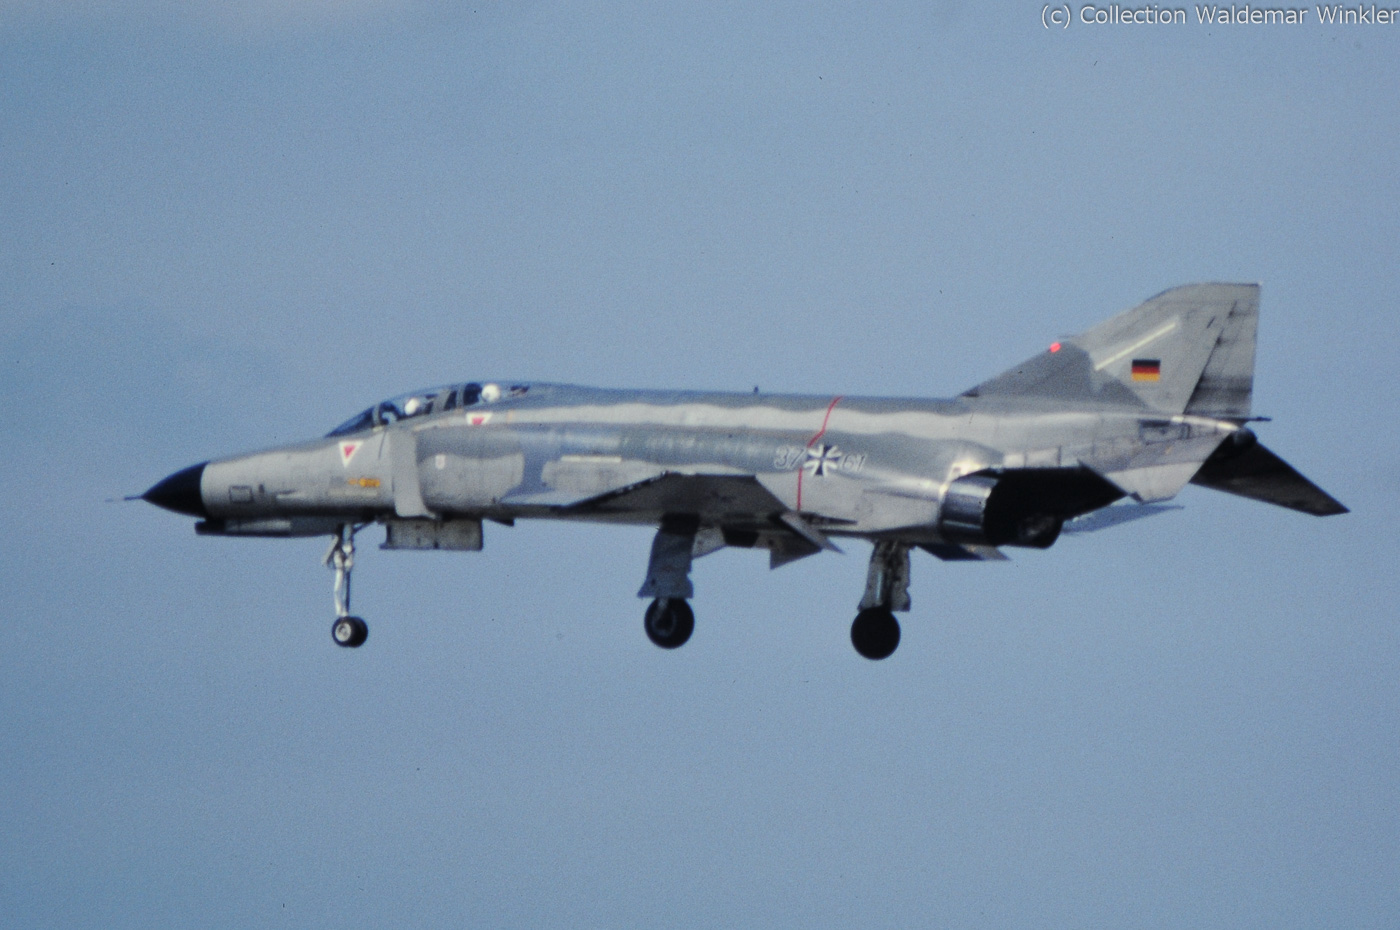 F-4_Phantom_II_DSC_1130.jpg